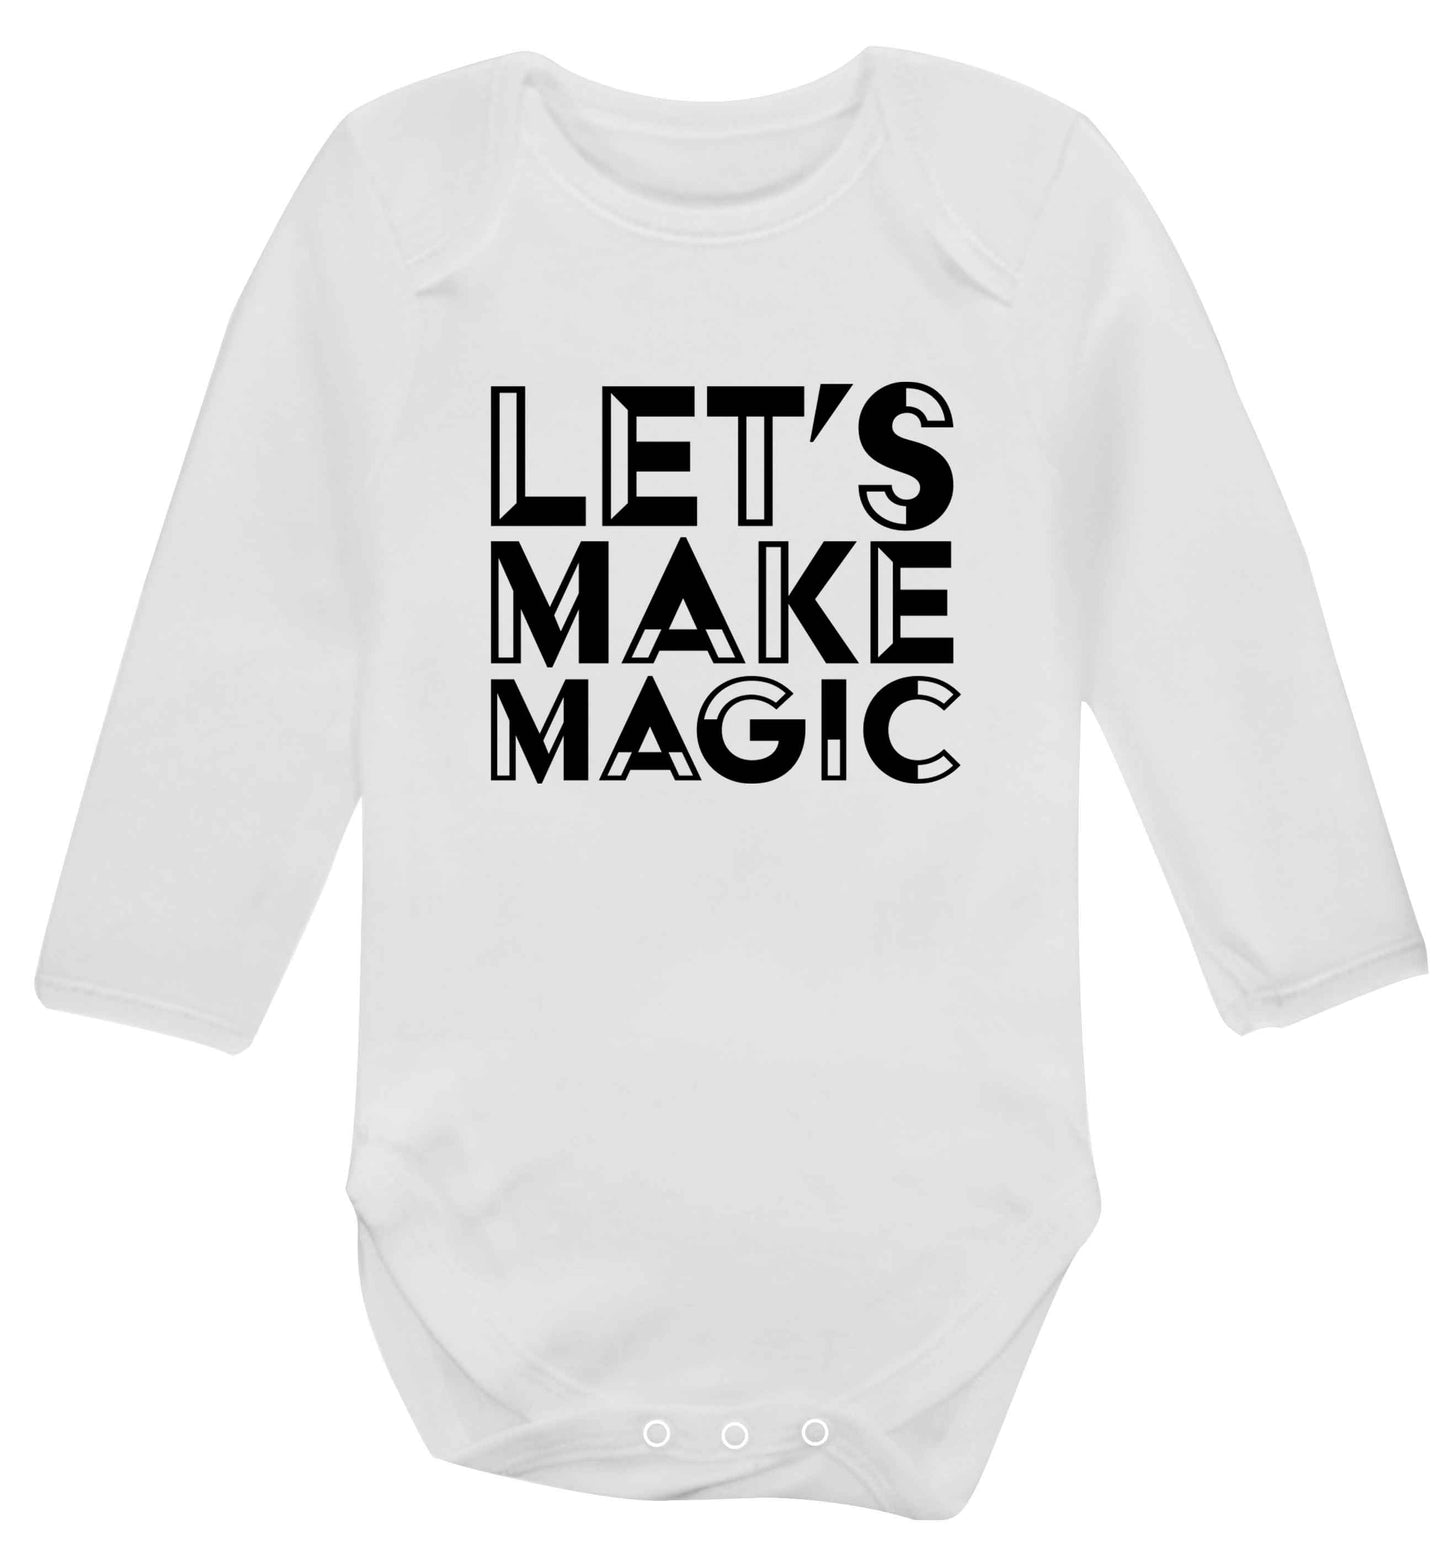 Let's make magic baby vest long sleeved white 6-12 months